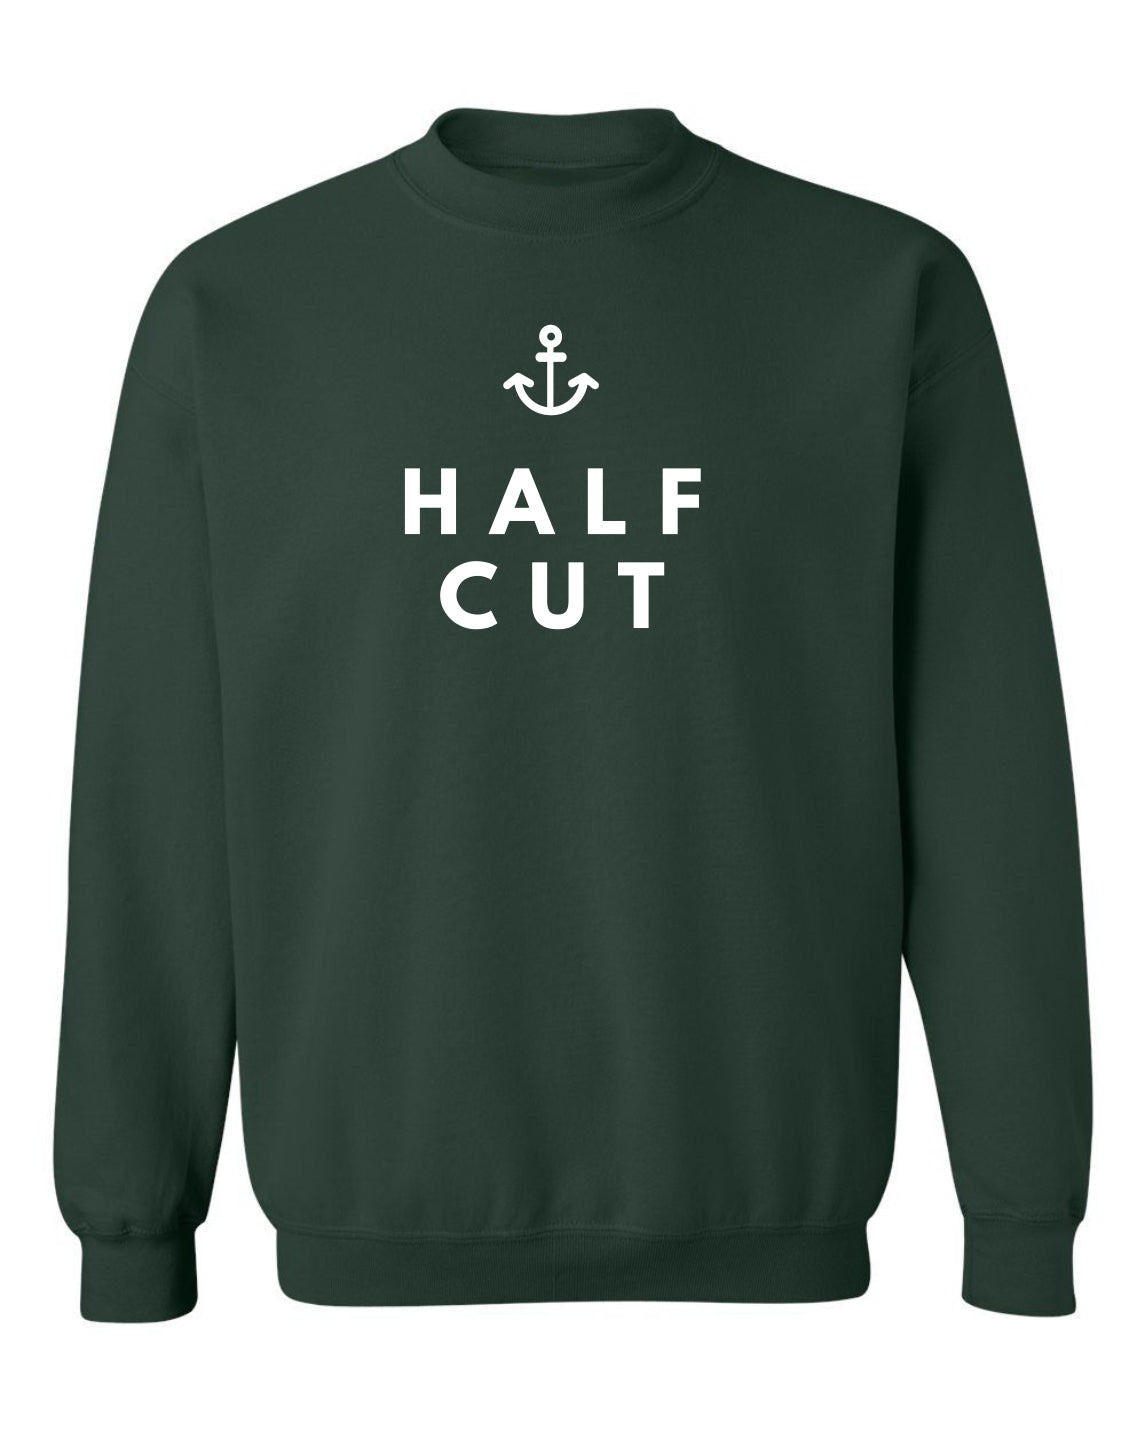 "Half Cut" Unisex Crewneck Sweatshirt